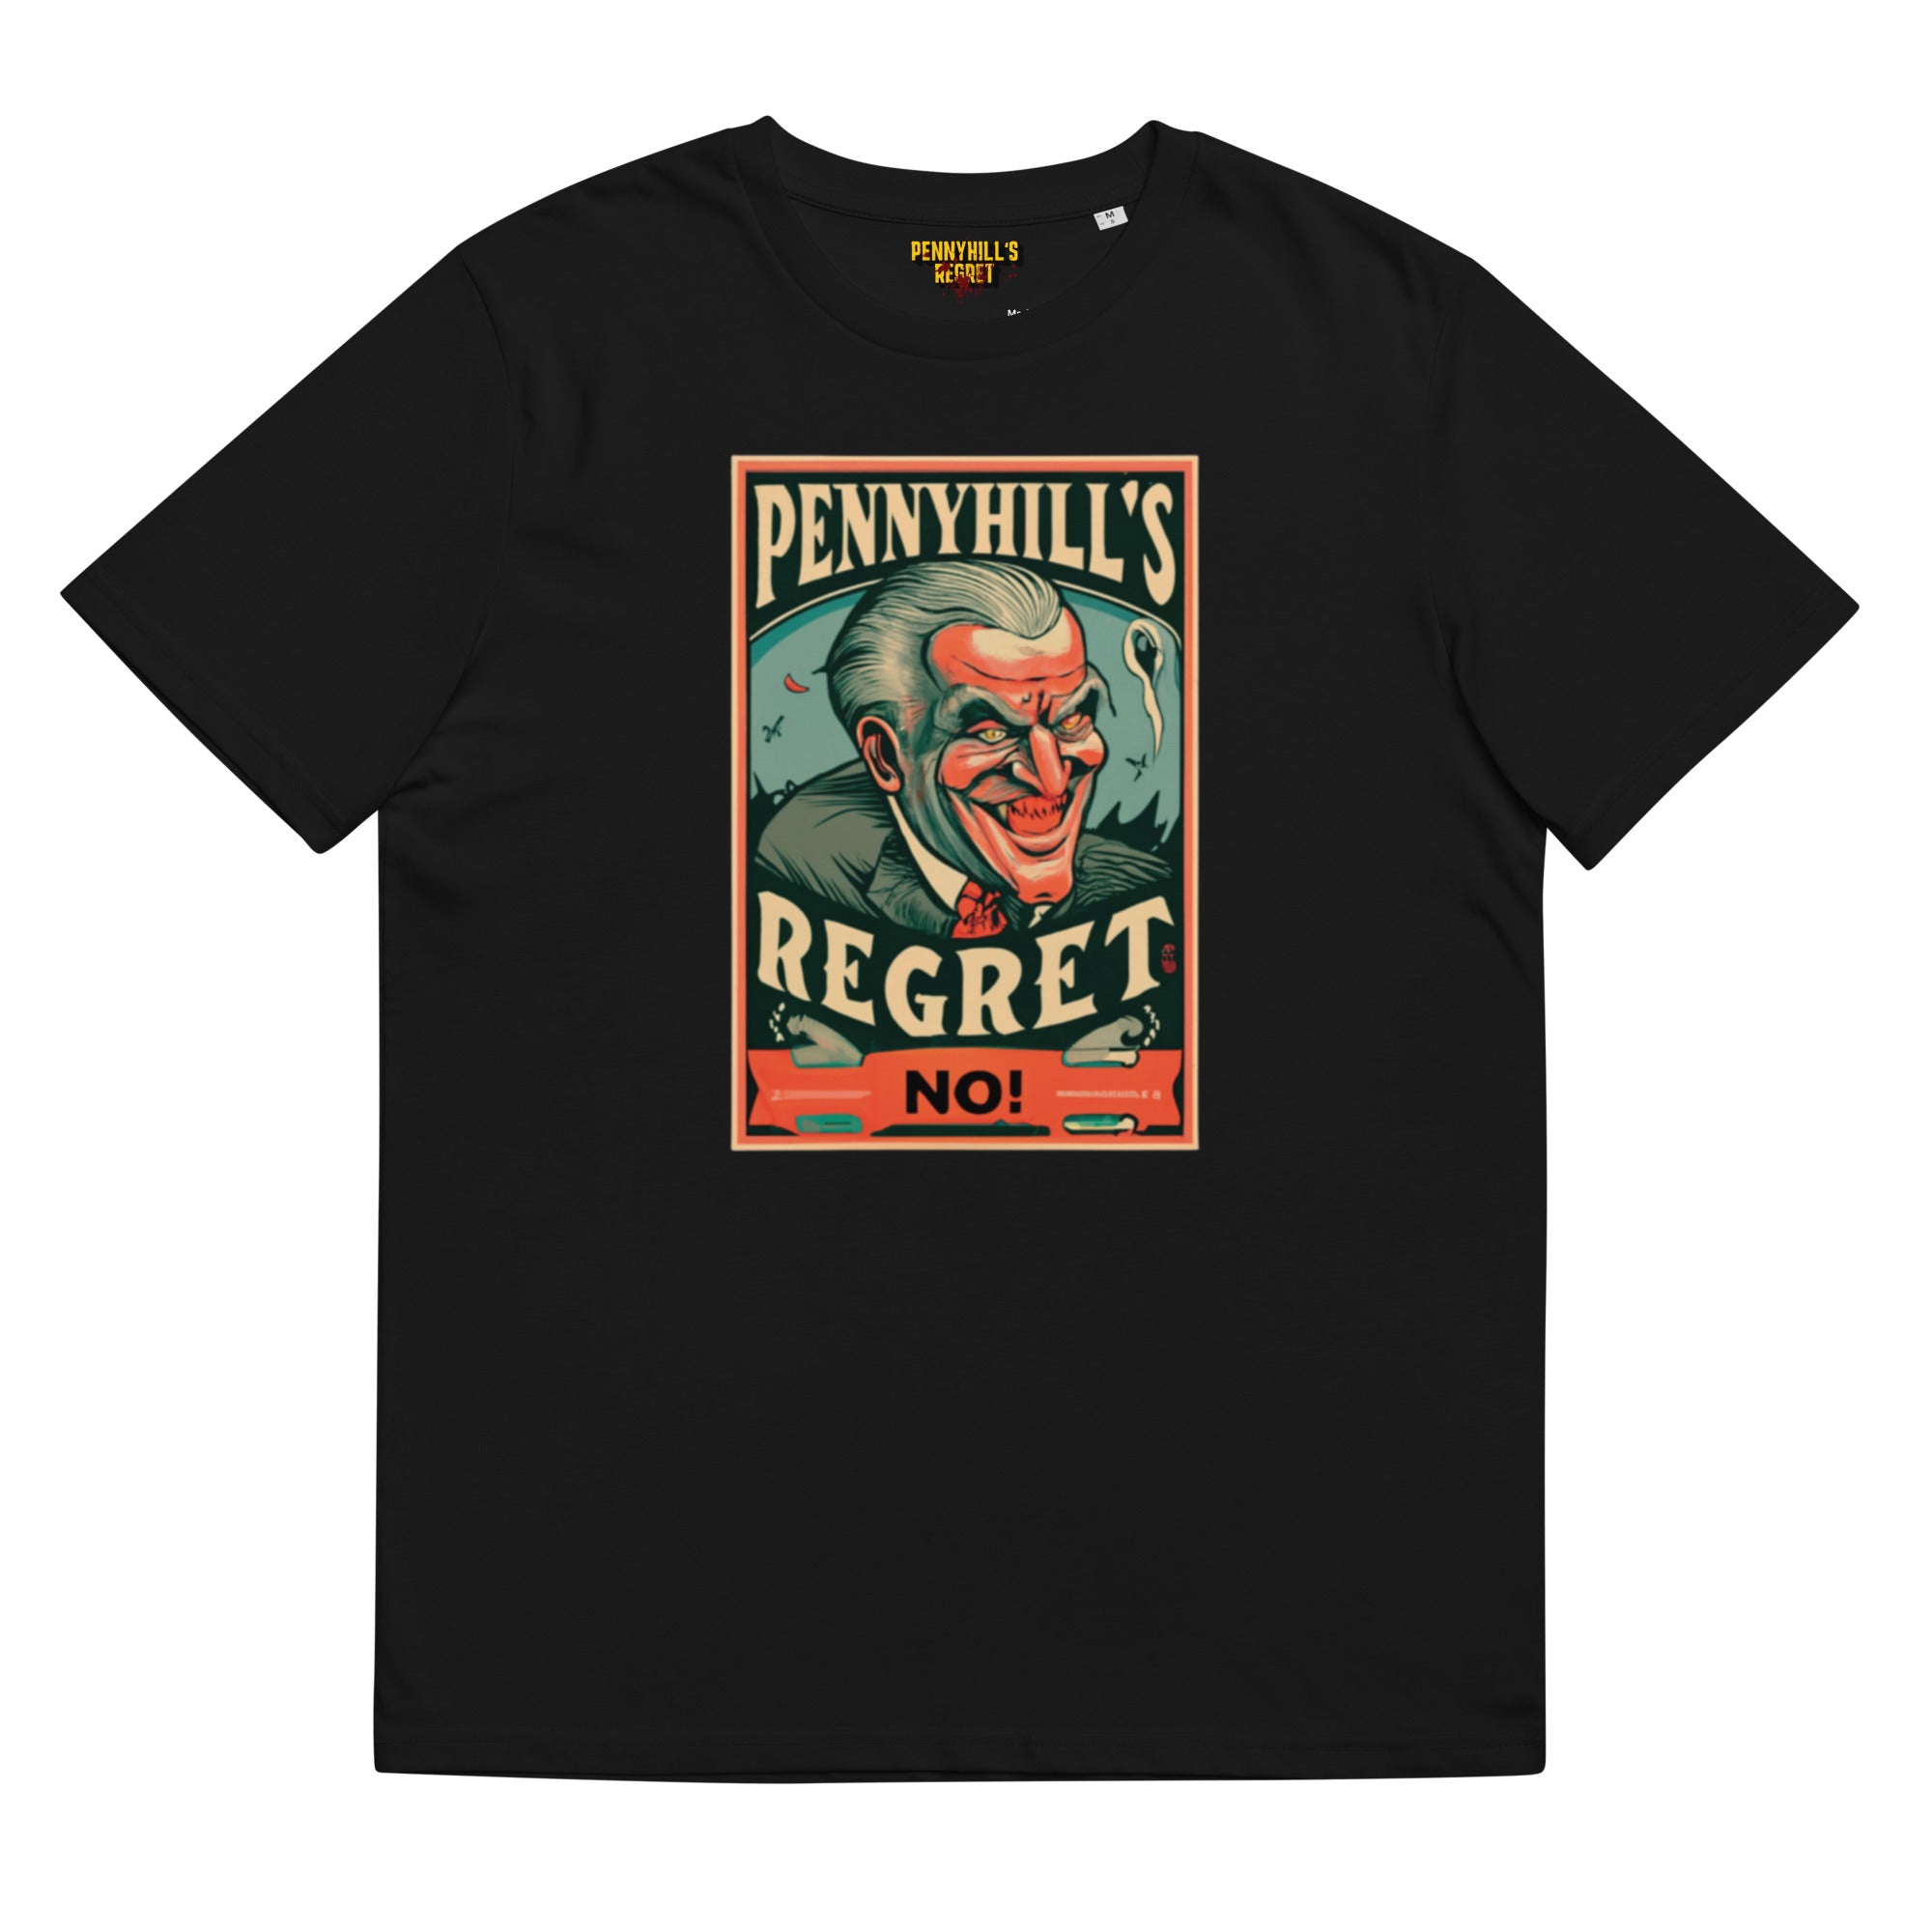 Evil Unisex organic cotton t-shirt - Pennyhill's Regret